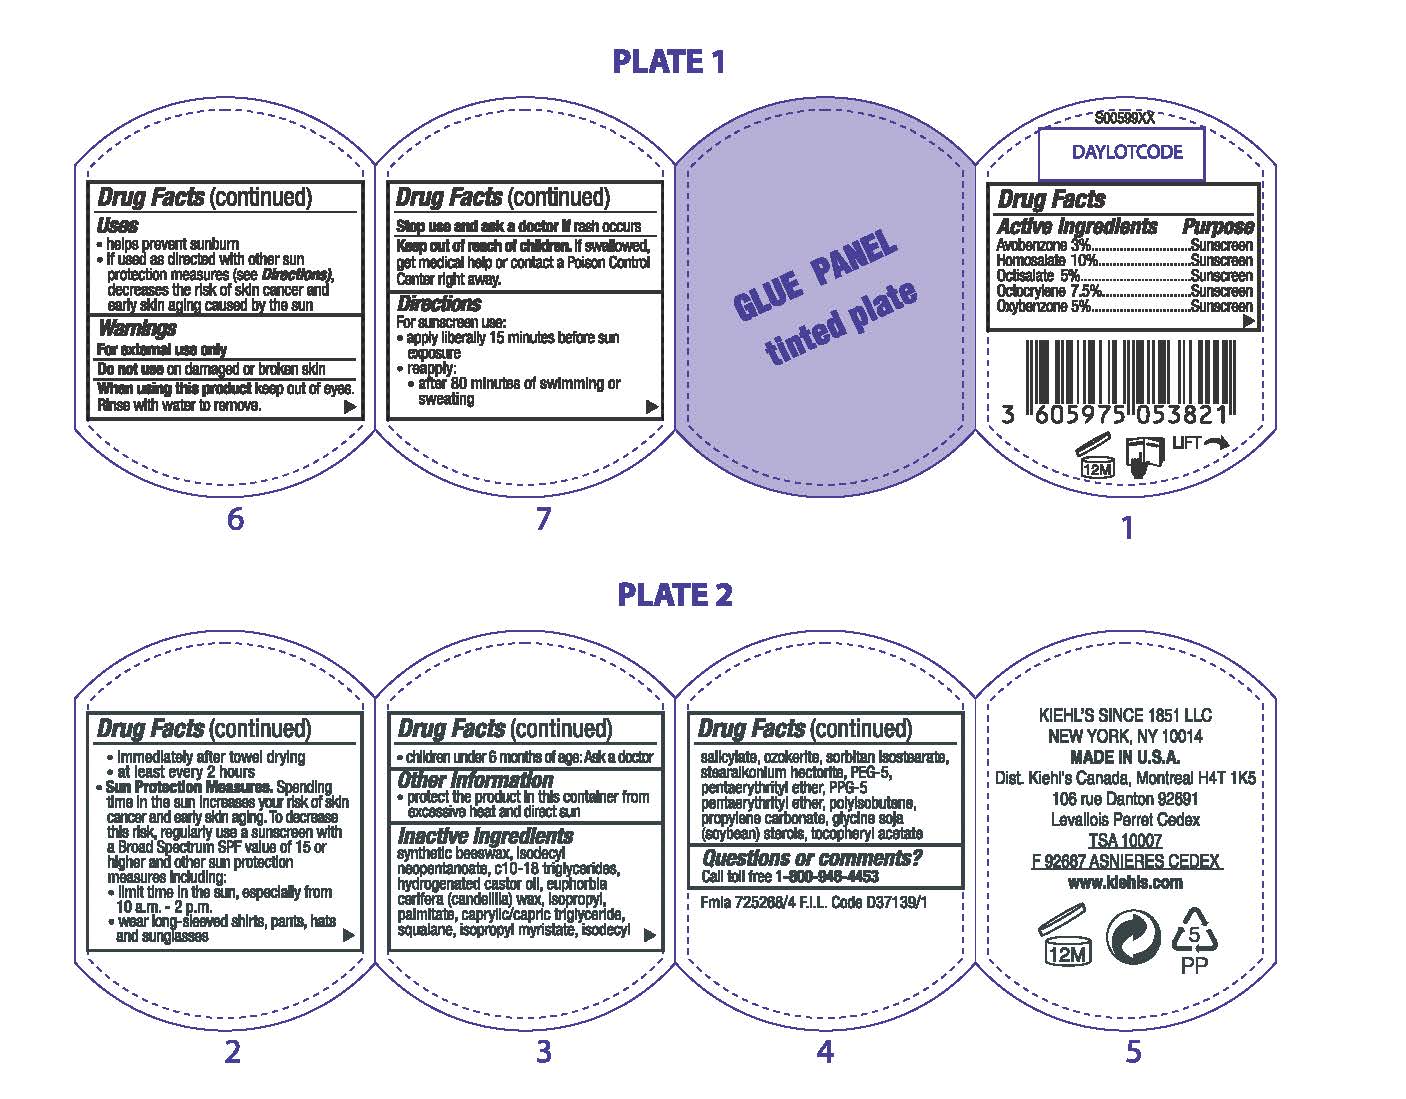 image of a back label